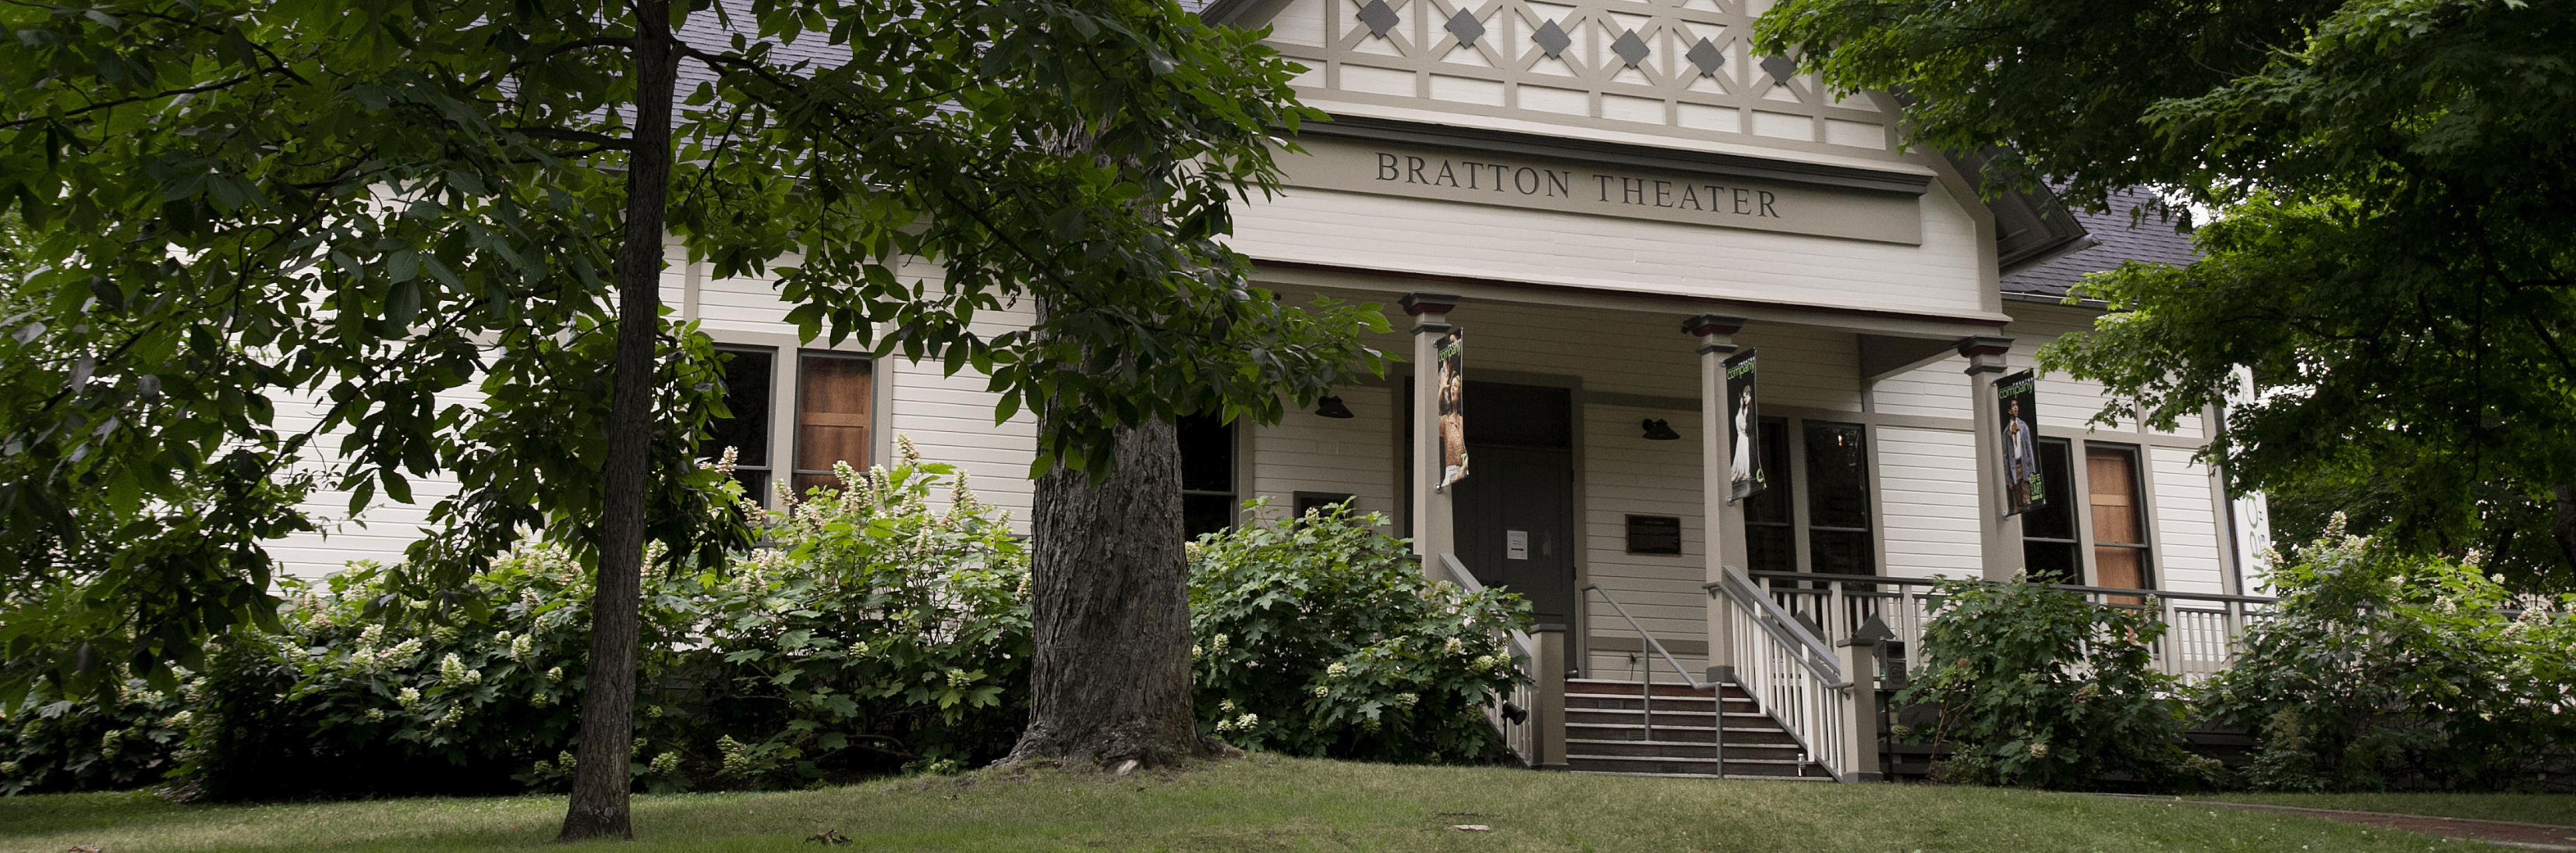 Exterior of Bratton Theater